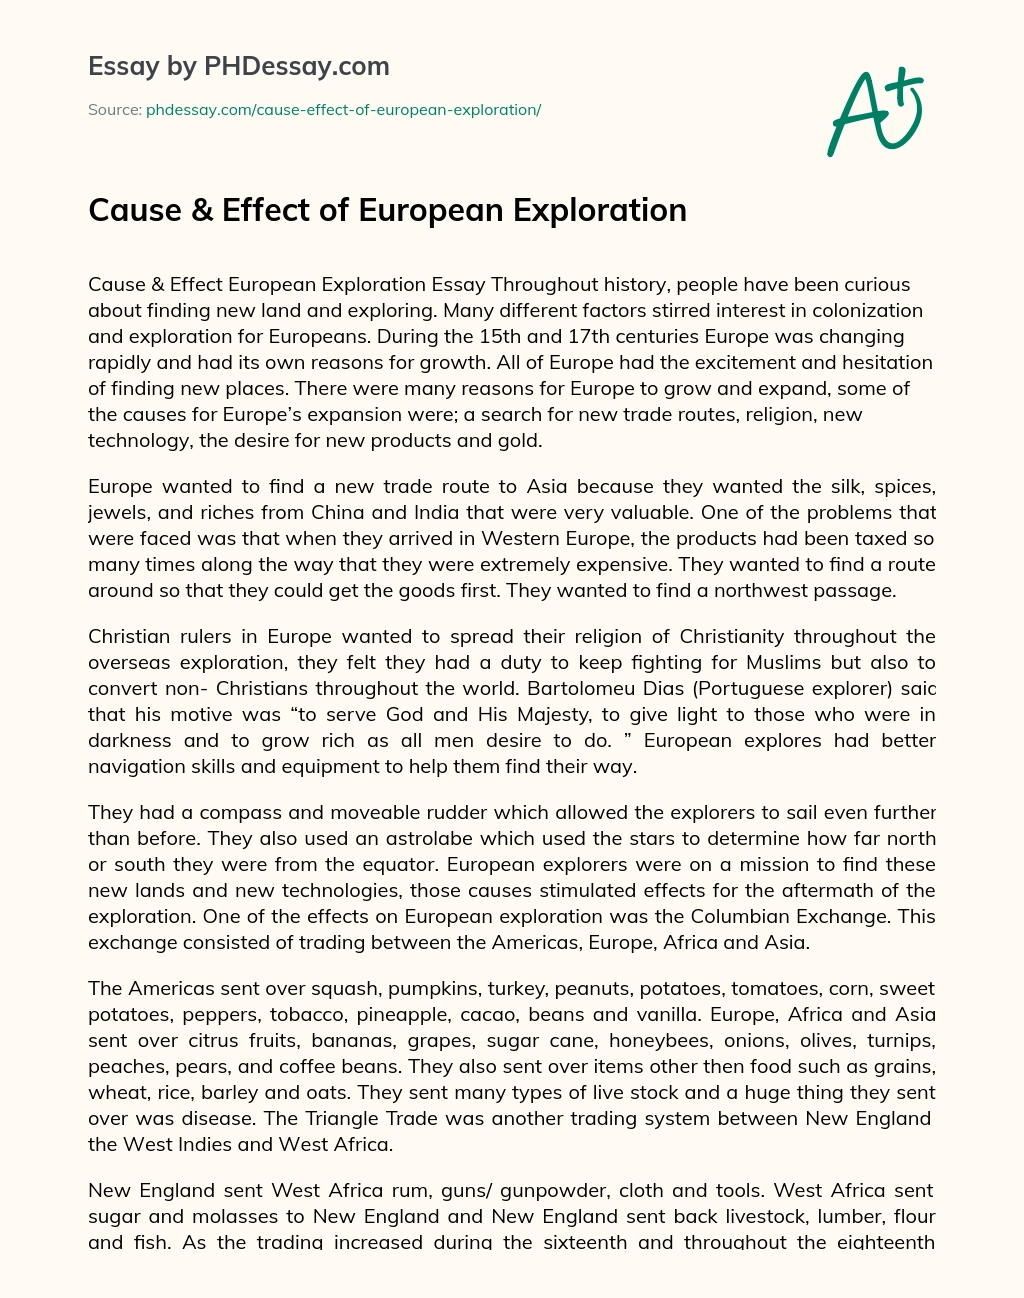 Cause & Effect of European Exploration